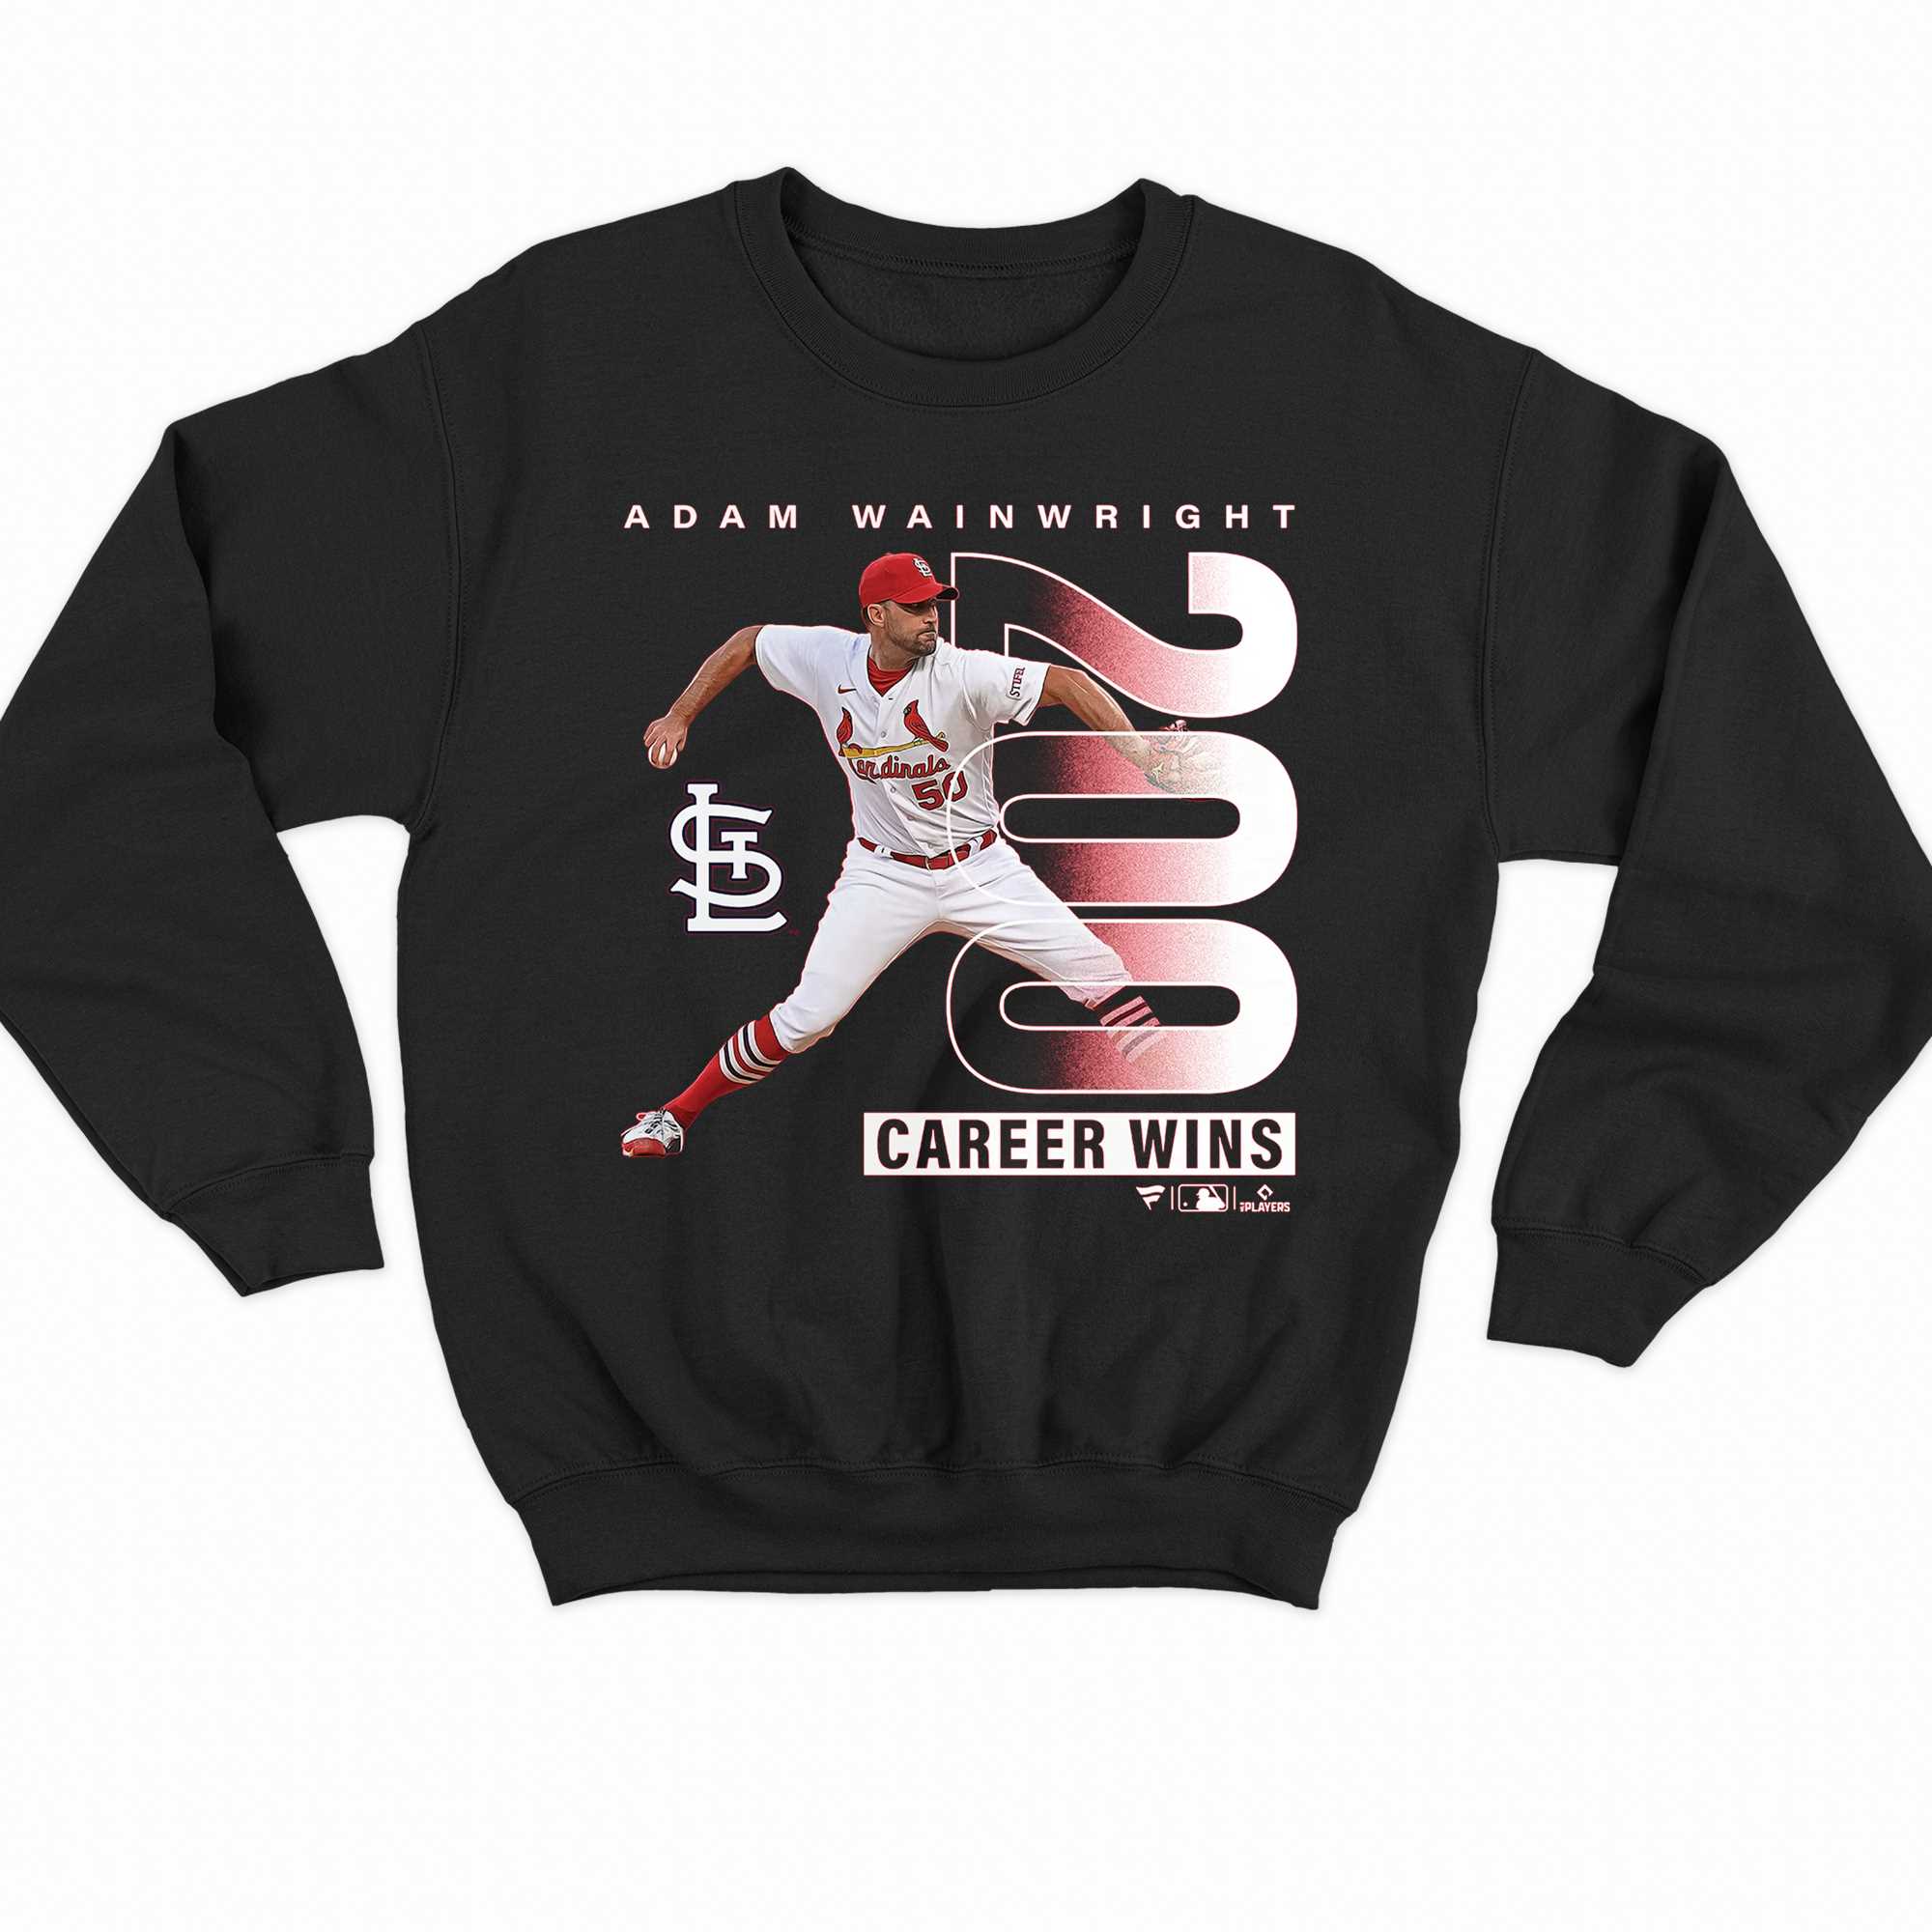 Fanatics Branded White St. Louis Cardinals Series Pullover Sweatshirt